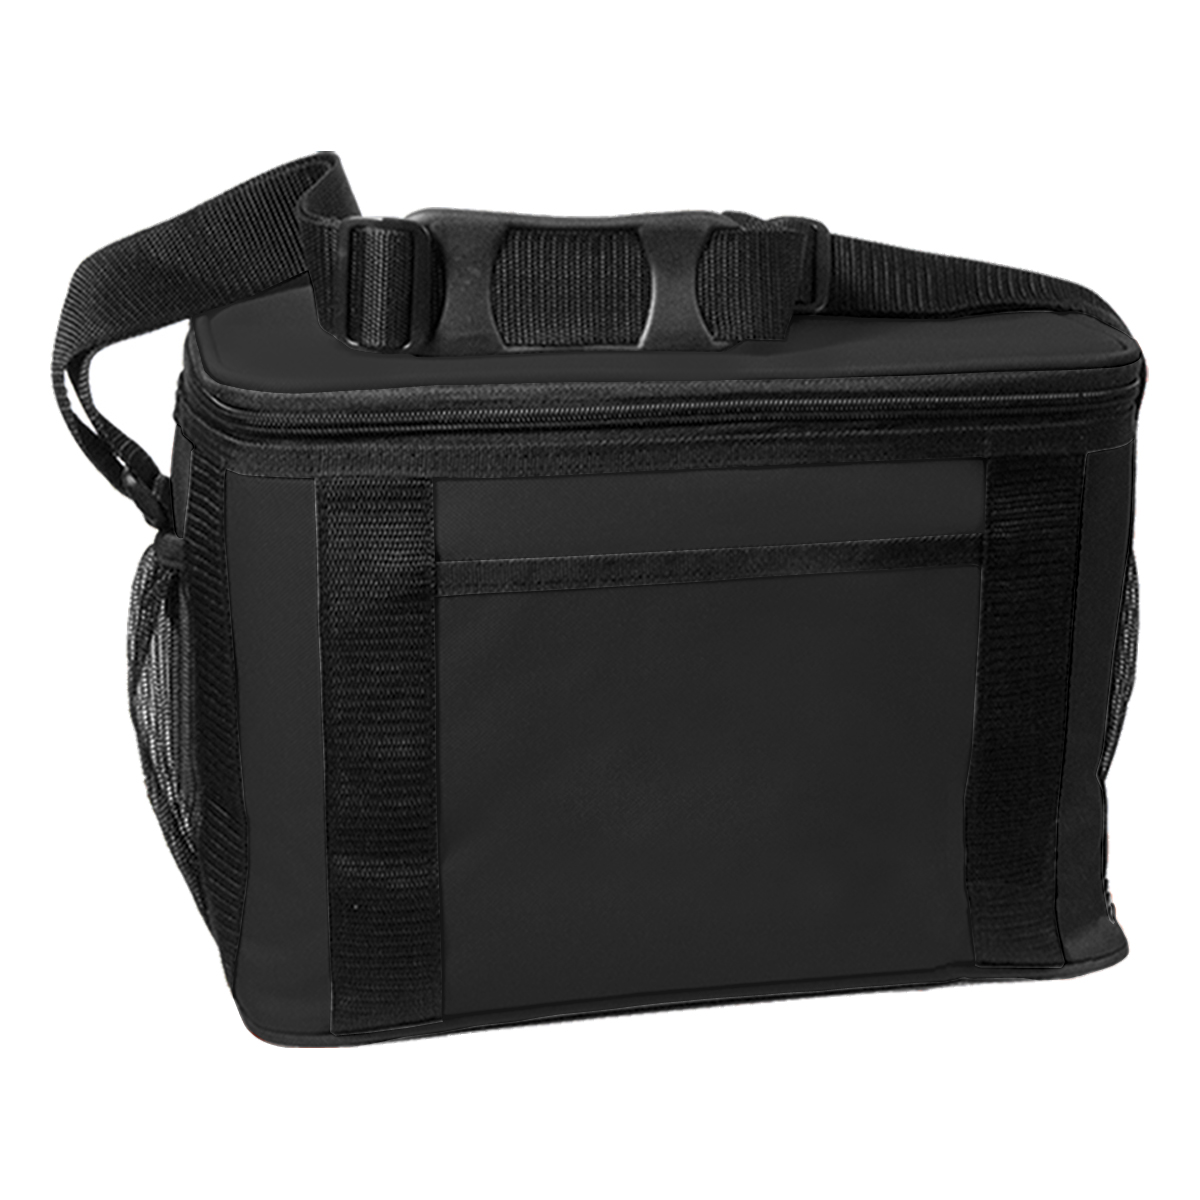 Black Jumbo Kooler Bag (13"W x 8"D x 9.5"H)